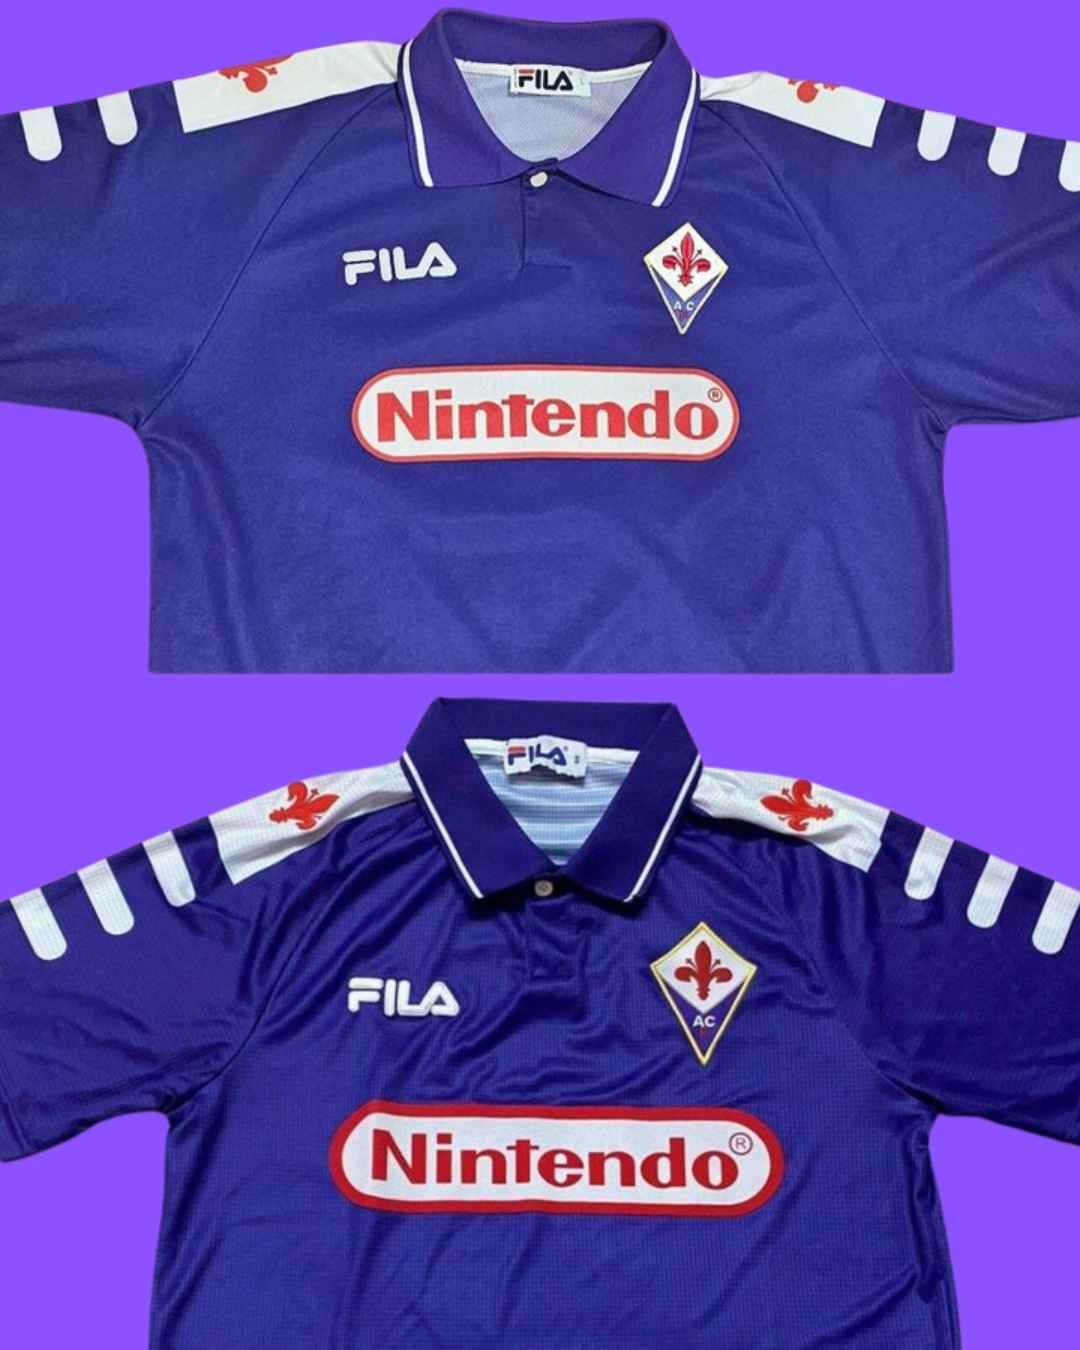 1998 Fiorentina shirt material